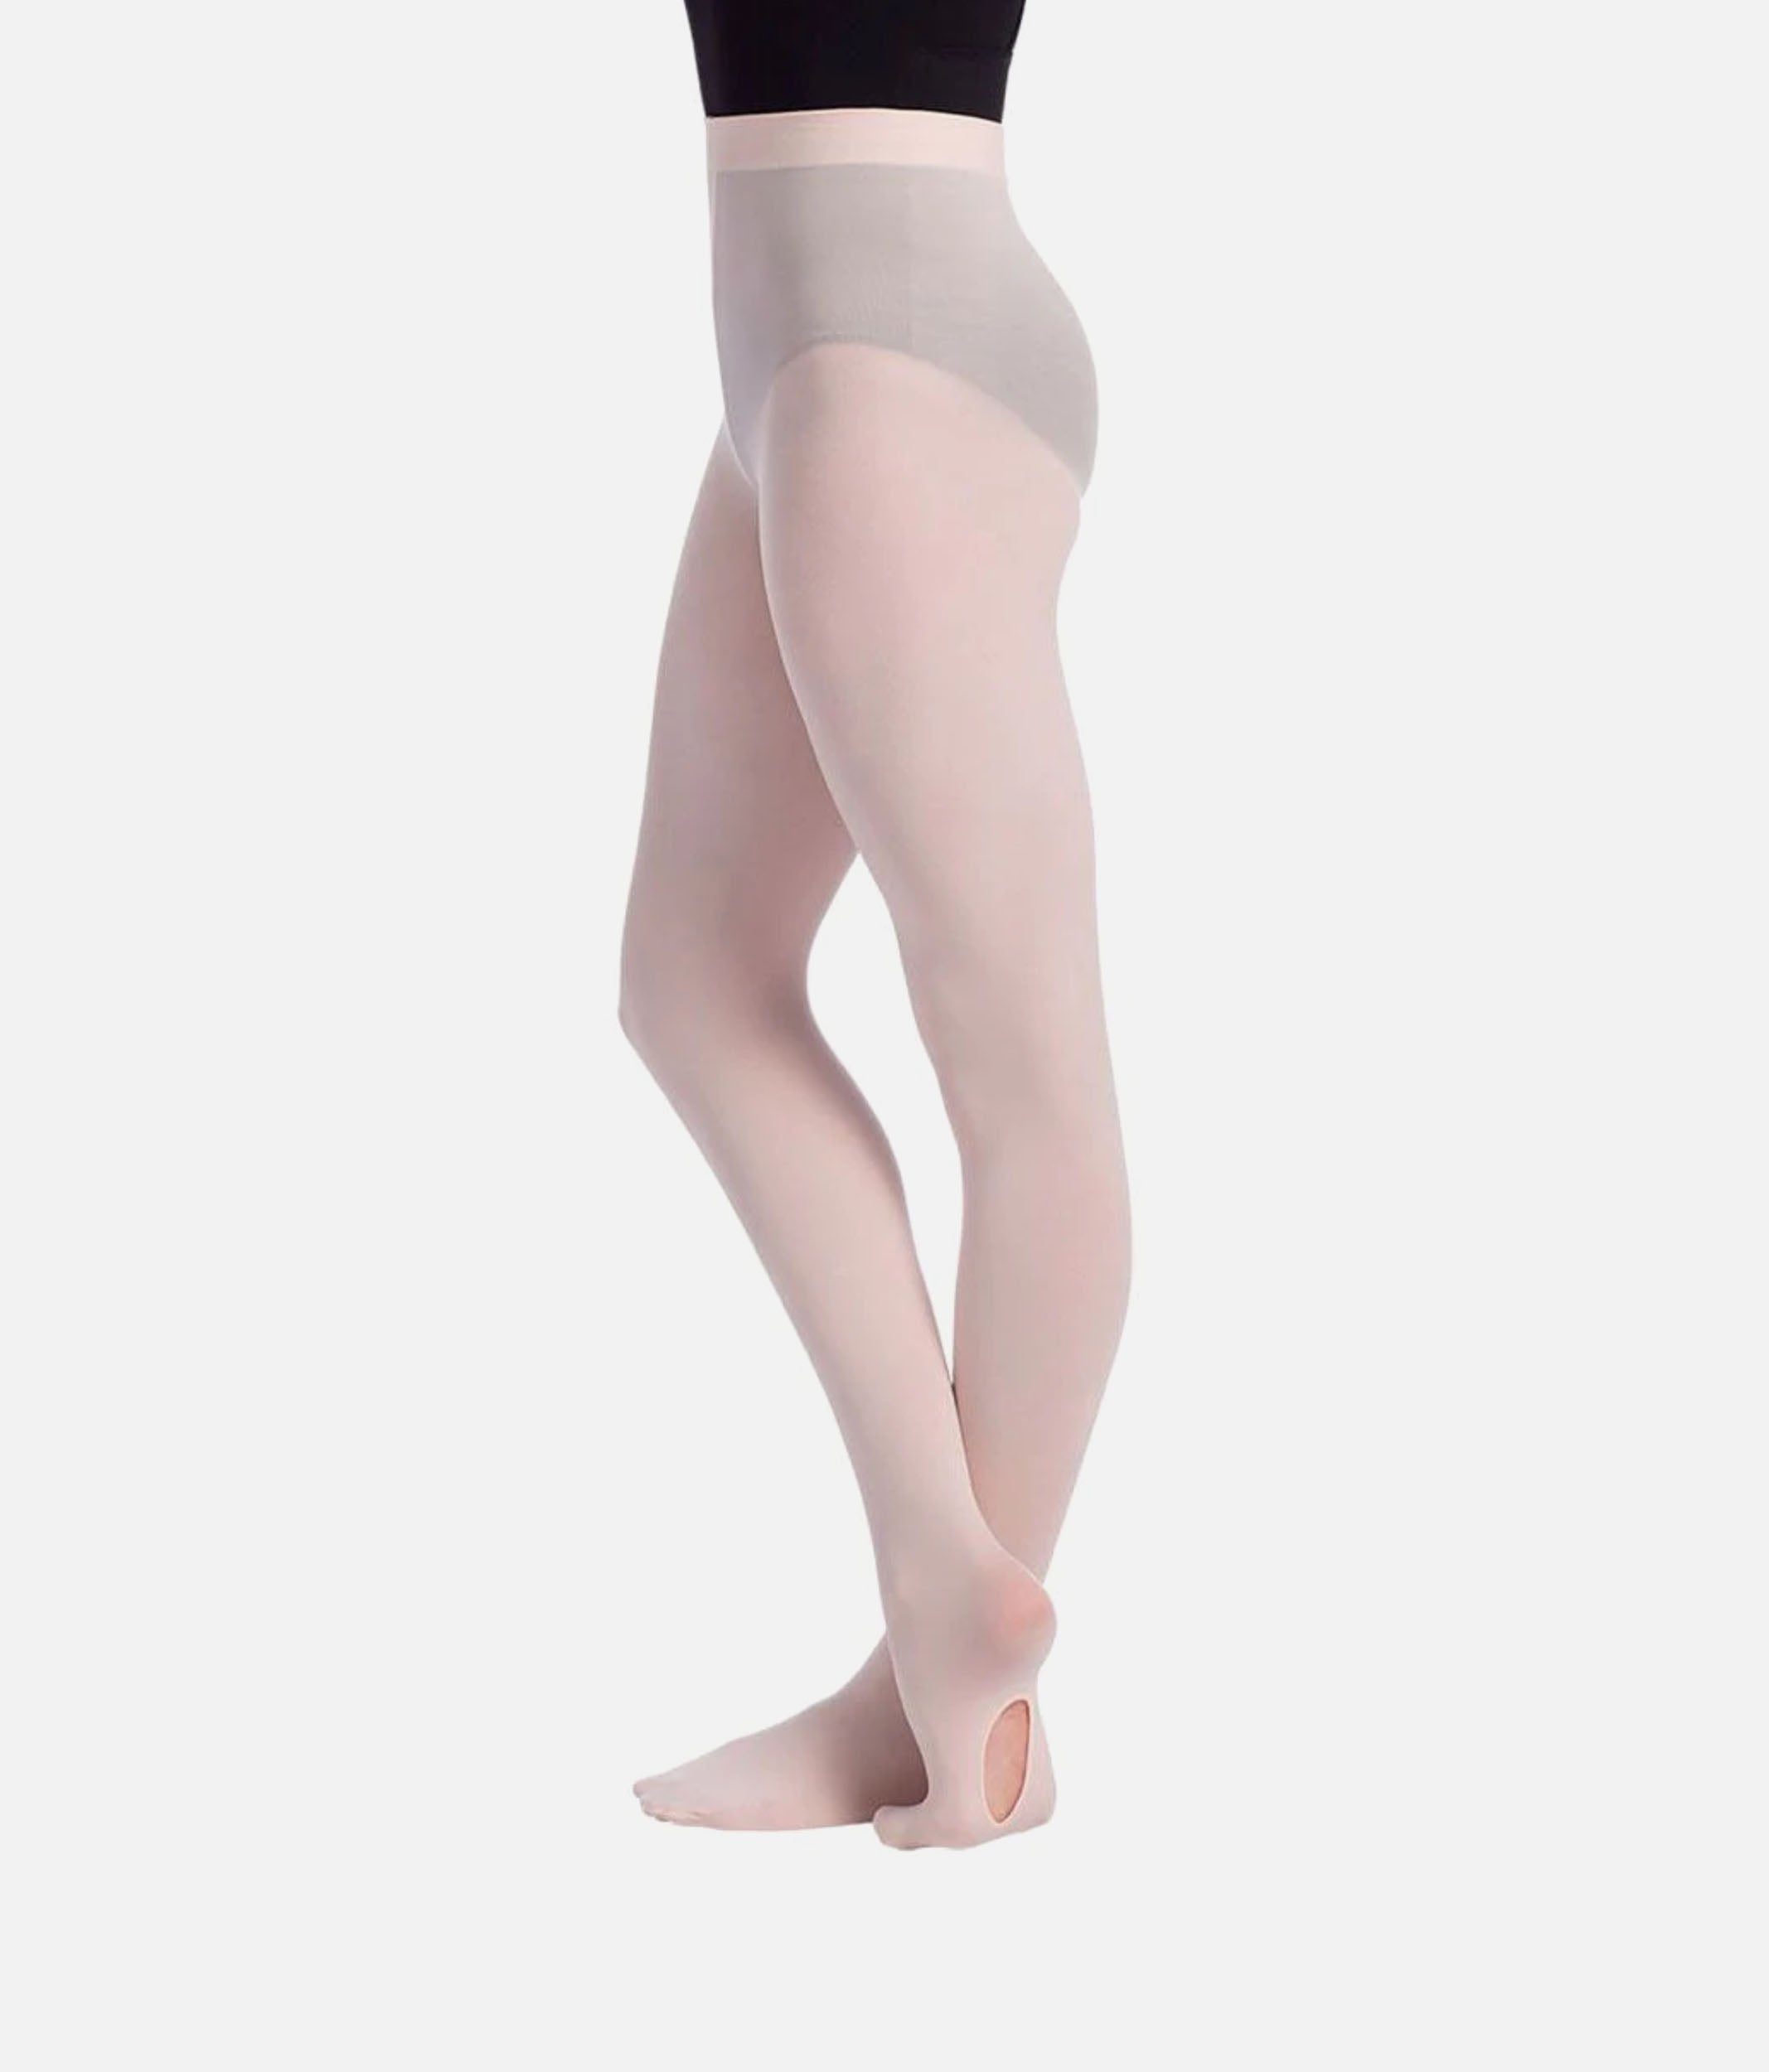 Silky Dance Socks  Dancewear at Wholesale Prices - Legwear